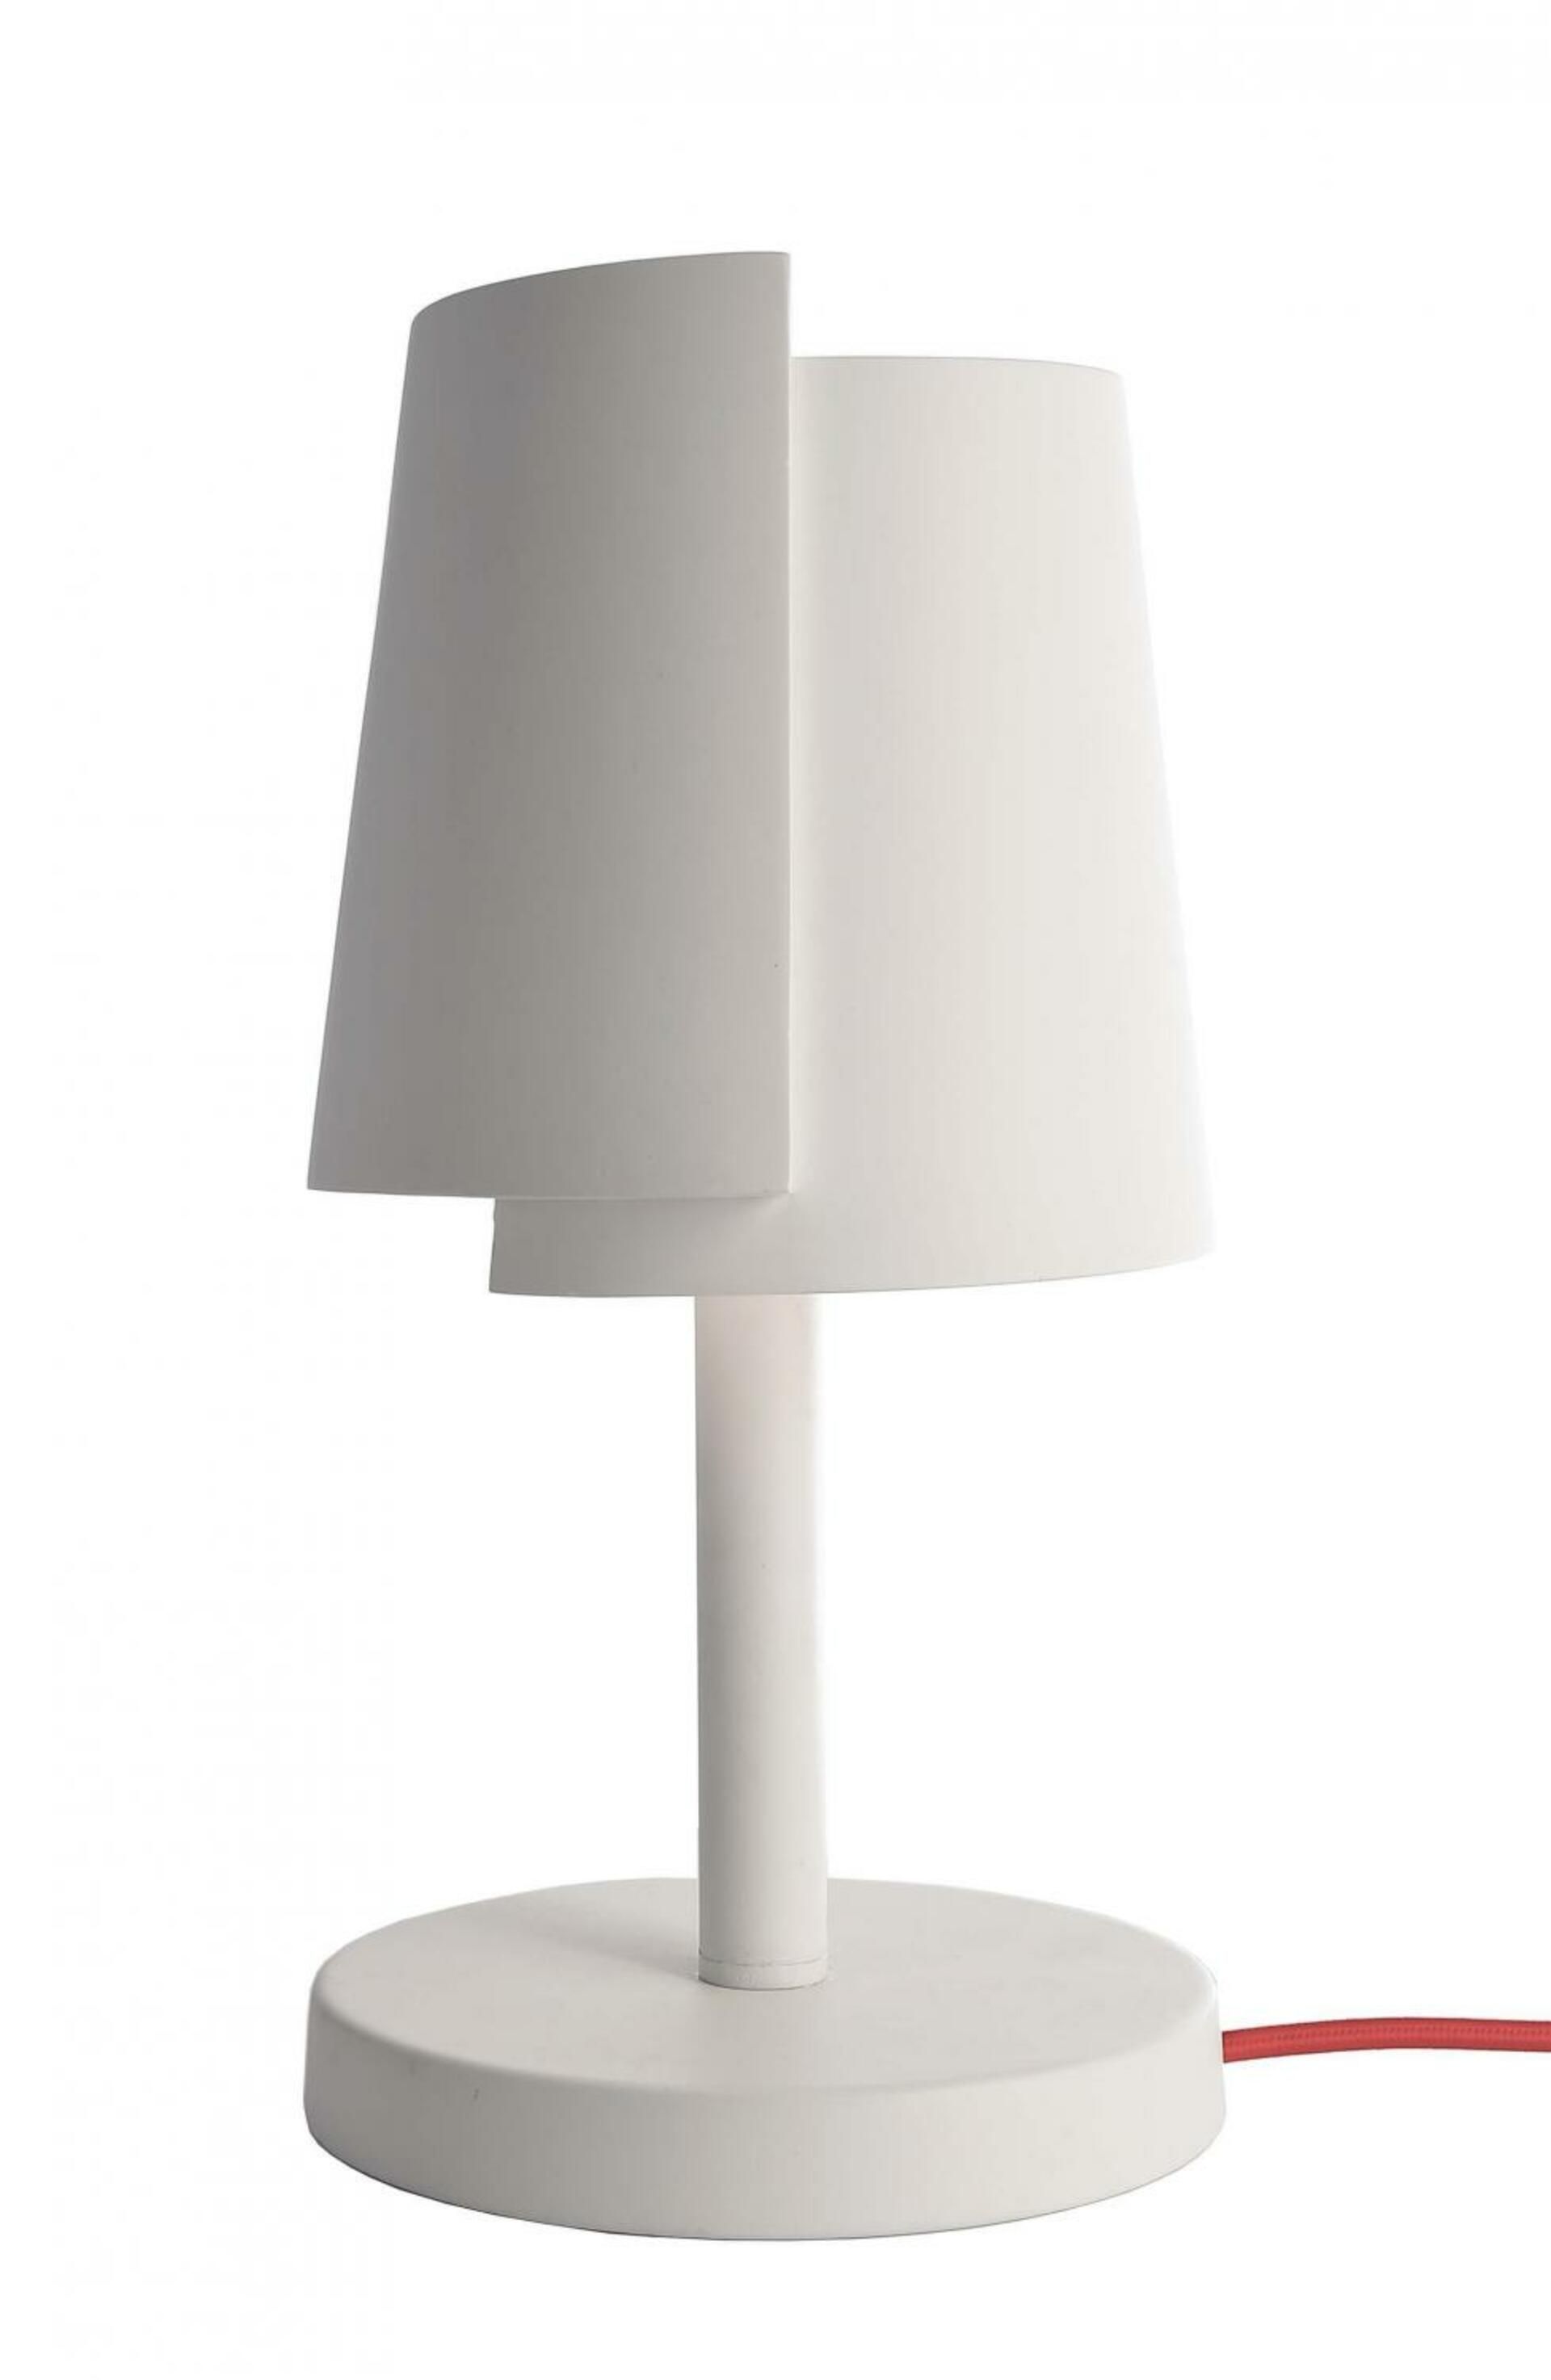 Light Impressions Deko-Light stolní lampa Twister 220-240V AC/50-60Hz G9 1x max. 25,00 W bílá 346010